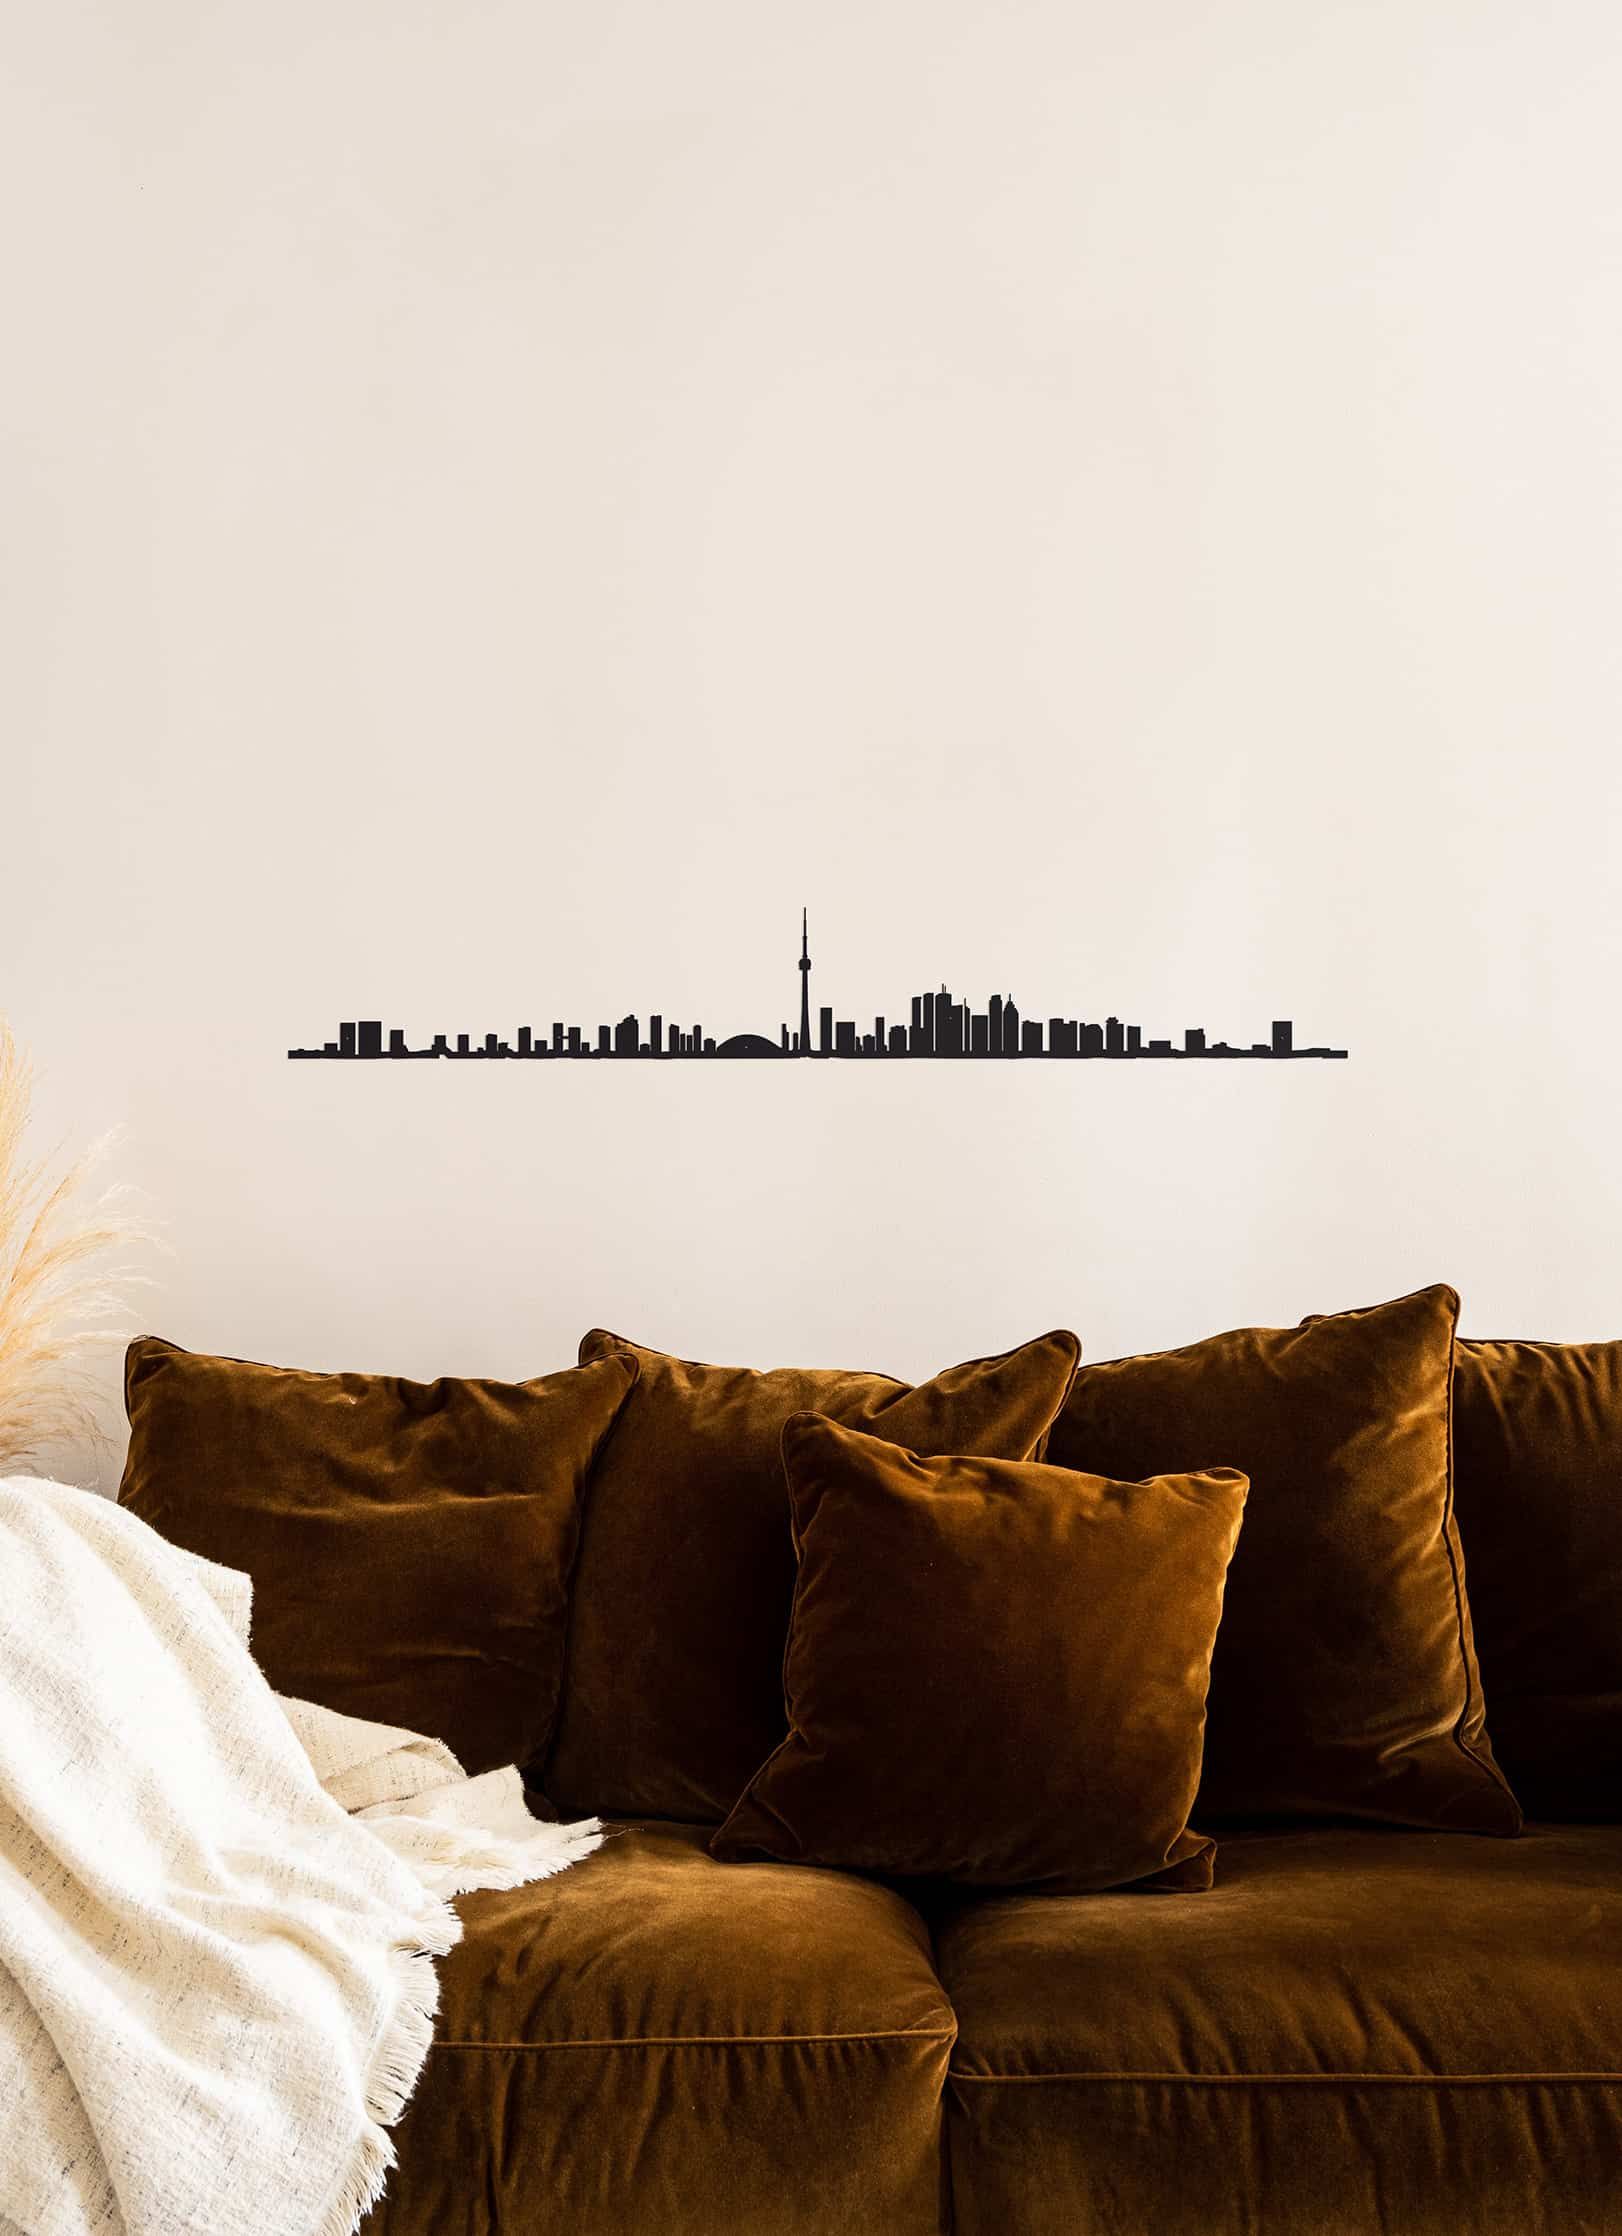 situational setting of the Toronto XL skyline